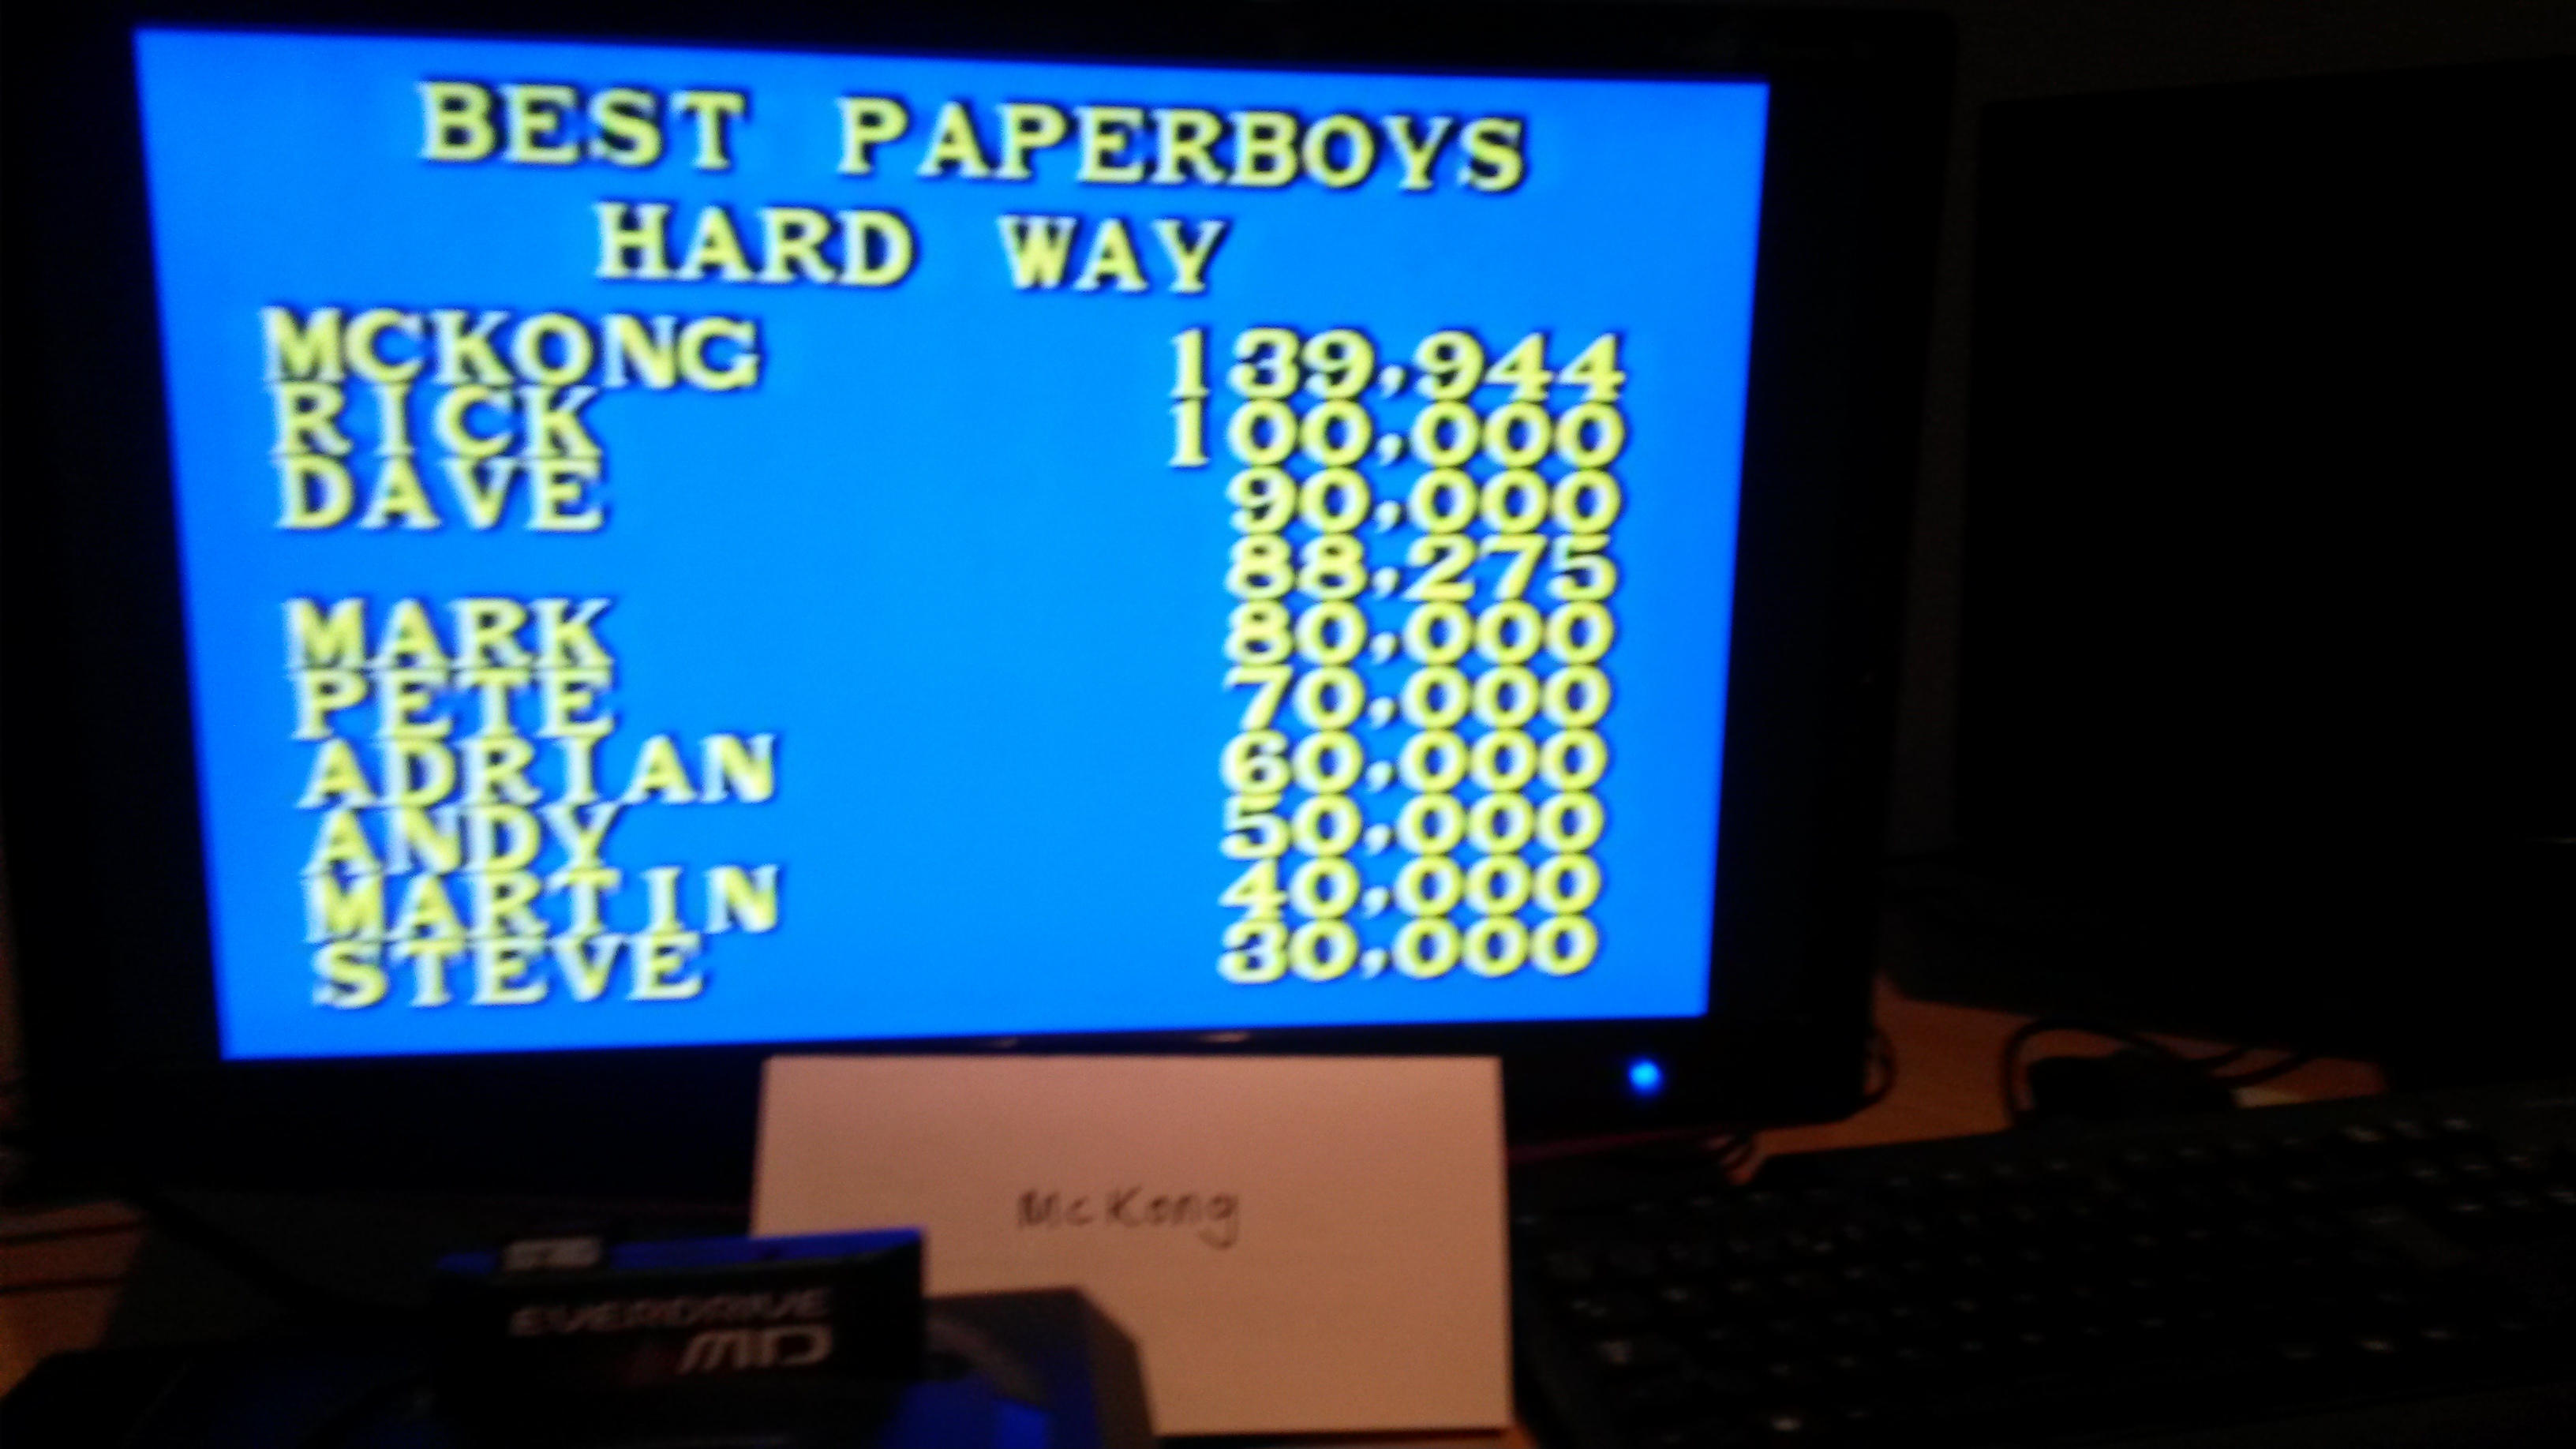 McKong: Paper Boy: Hard Way [Easy] (Sega Genesis / MegaDrive) 139,944 points on 2015-06-30 15:39:20